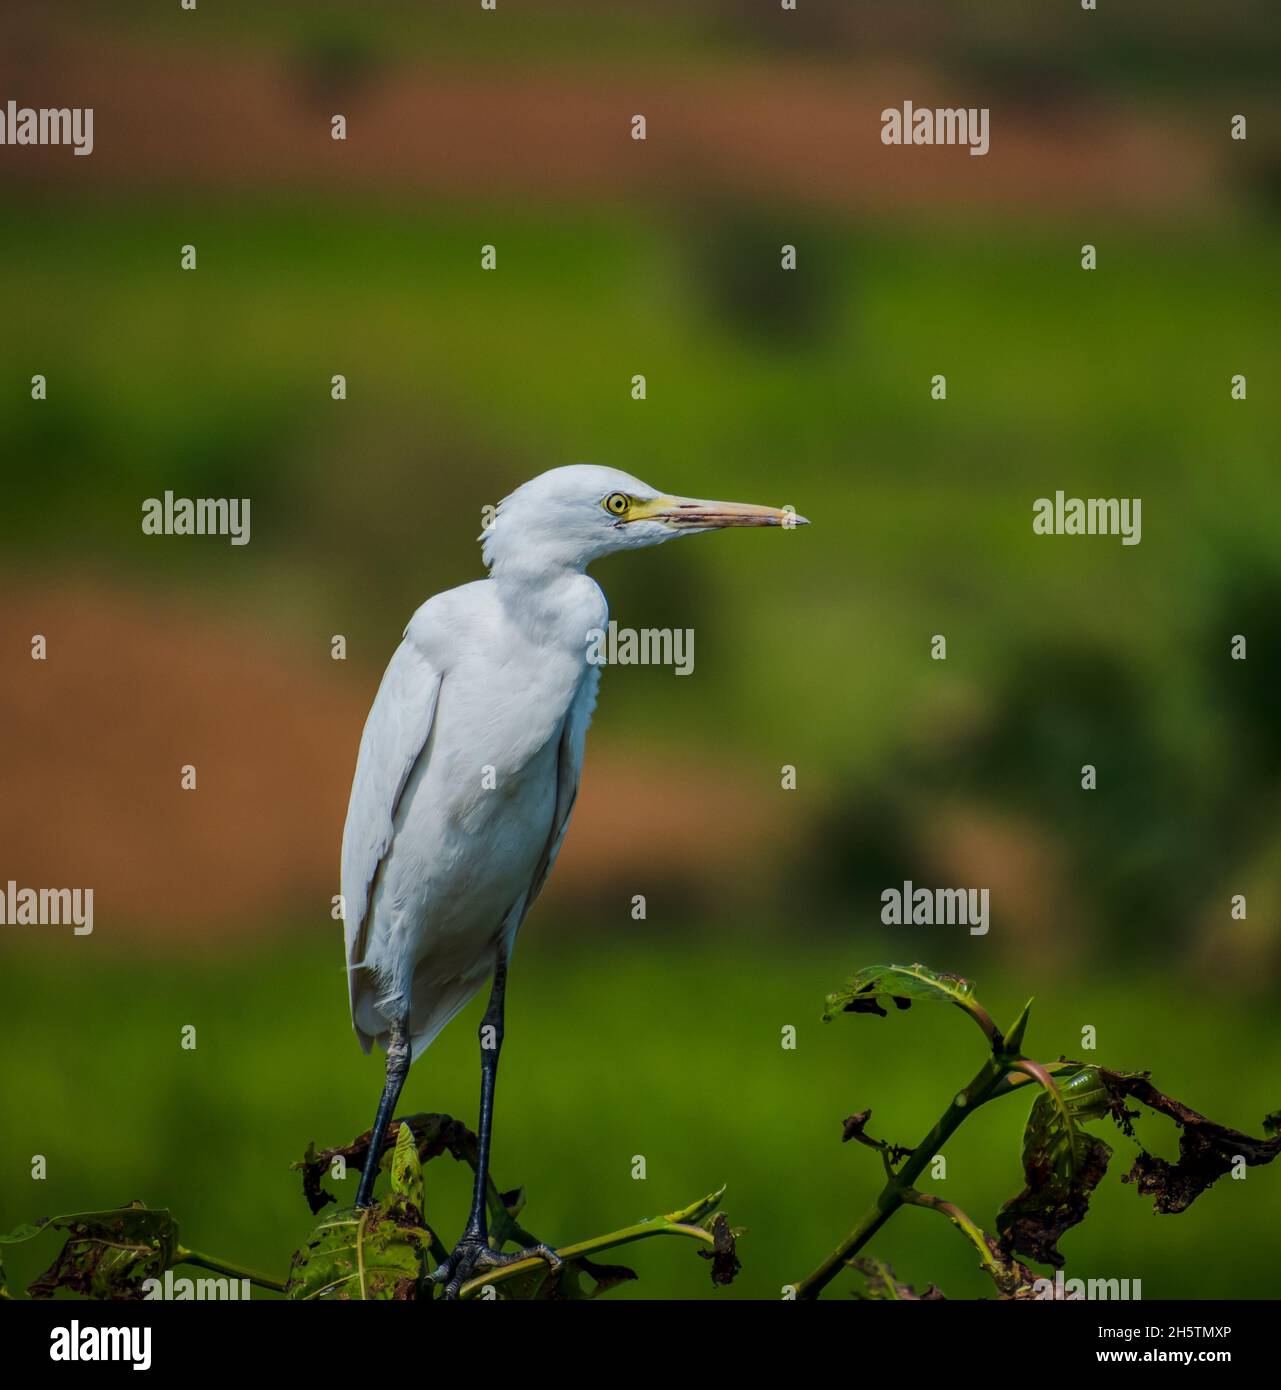 a beautiful heron looking Stock Photo